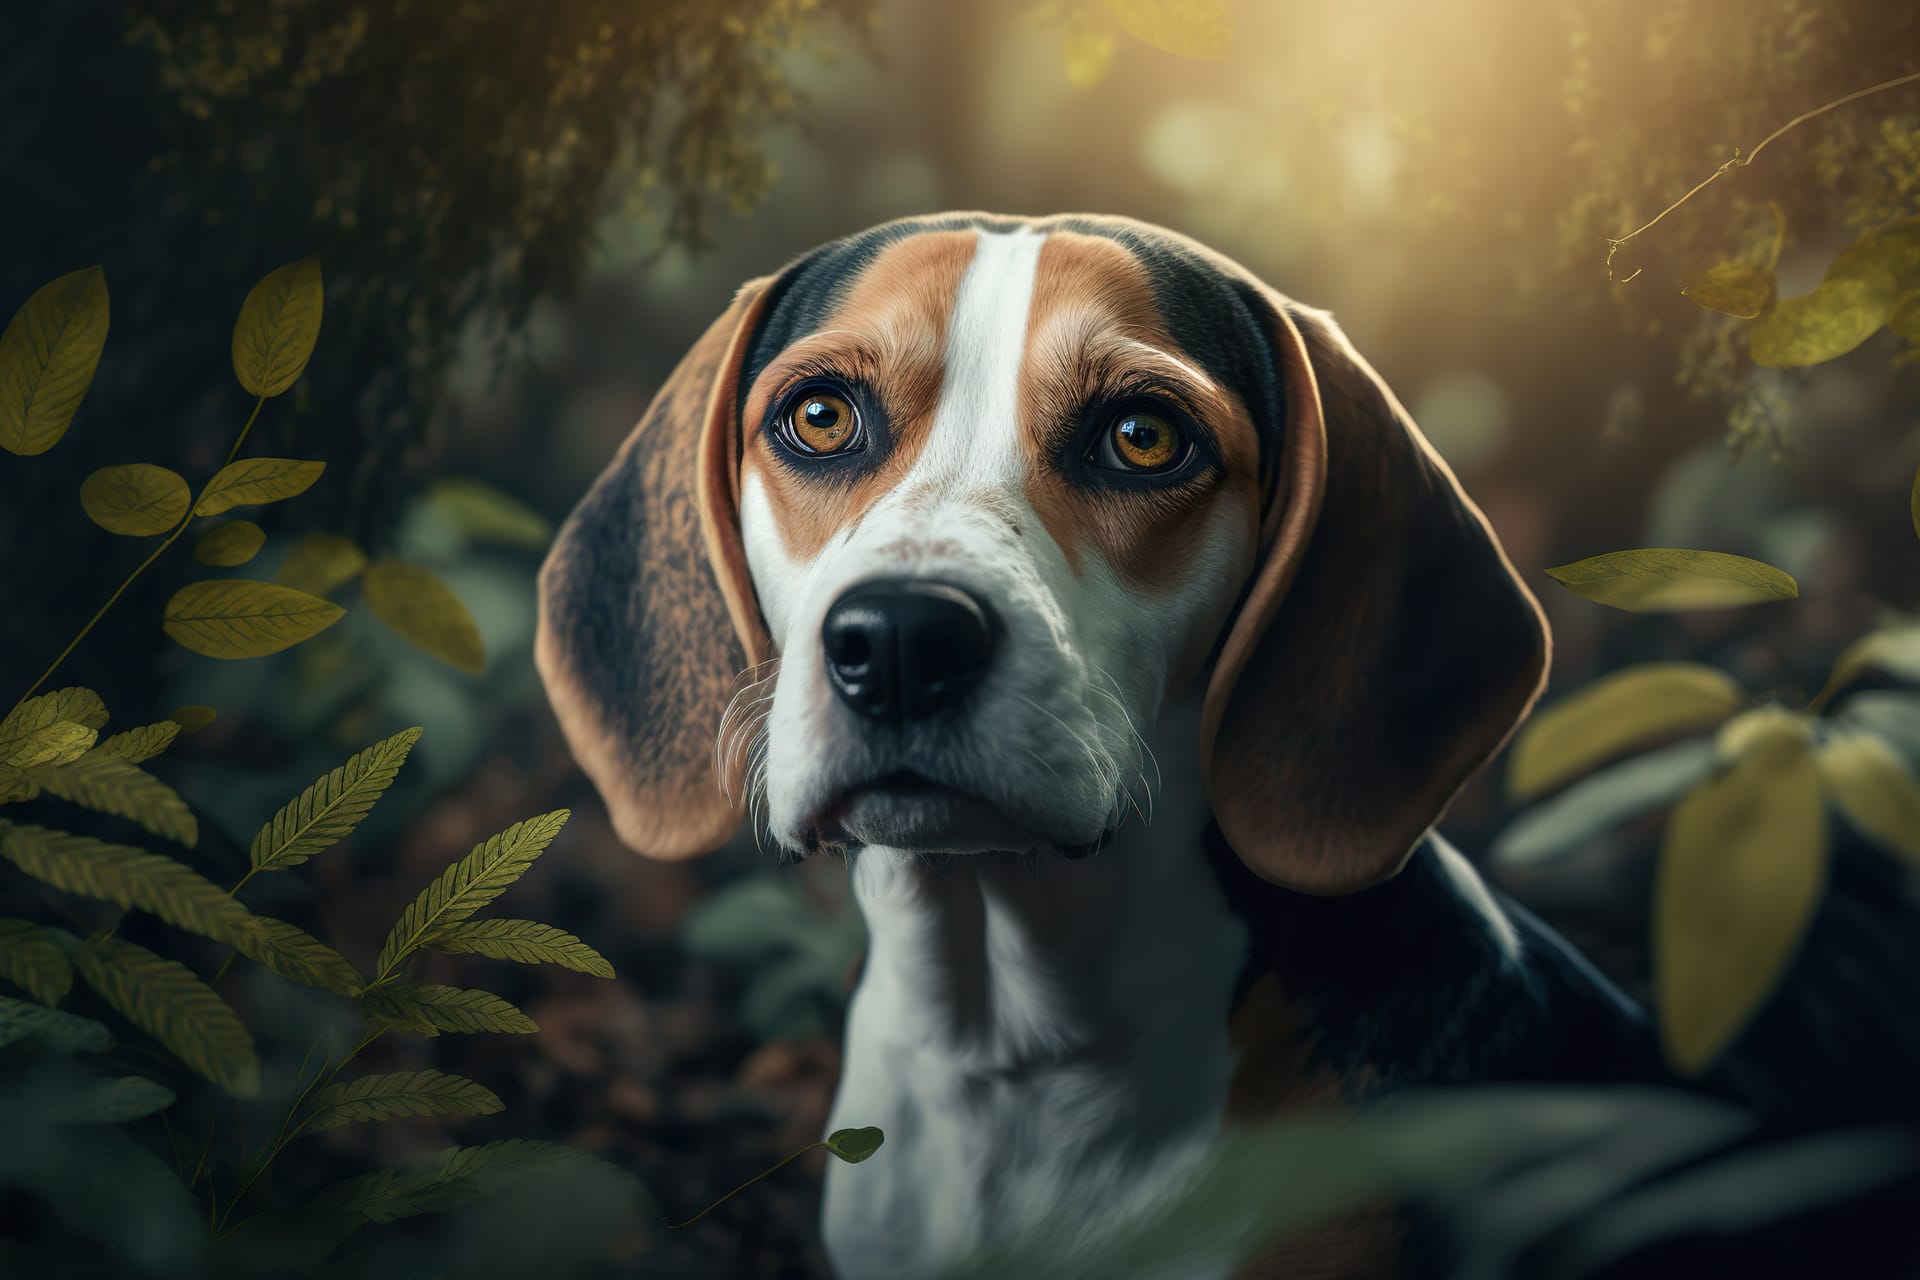 Beagle portrait nature concept animal life care health pets